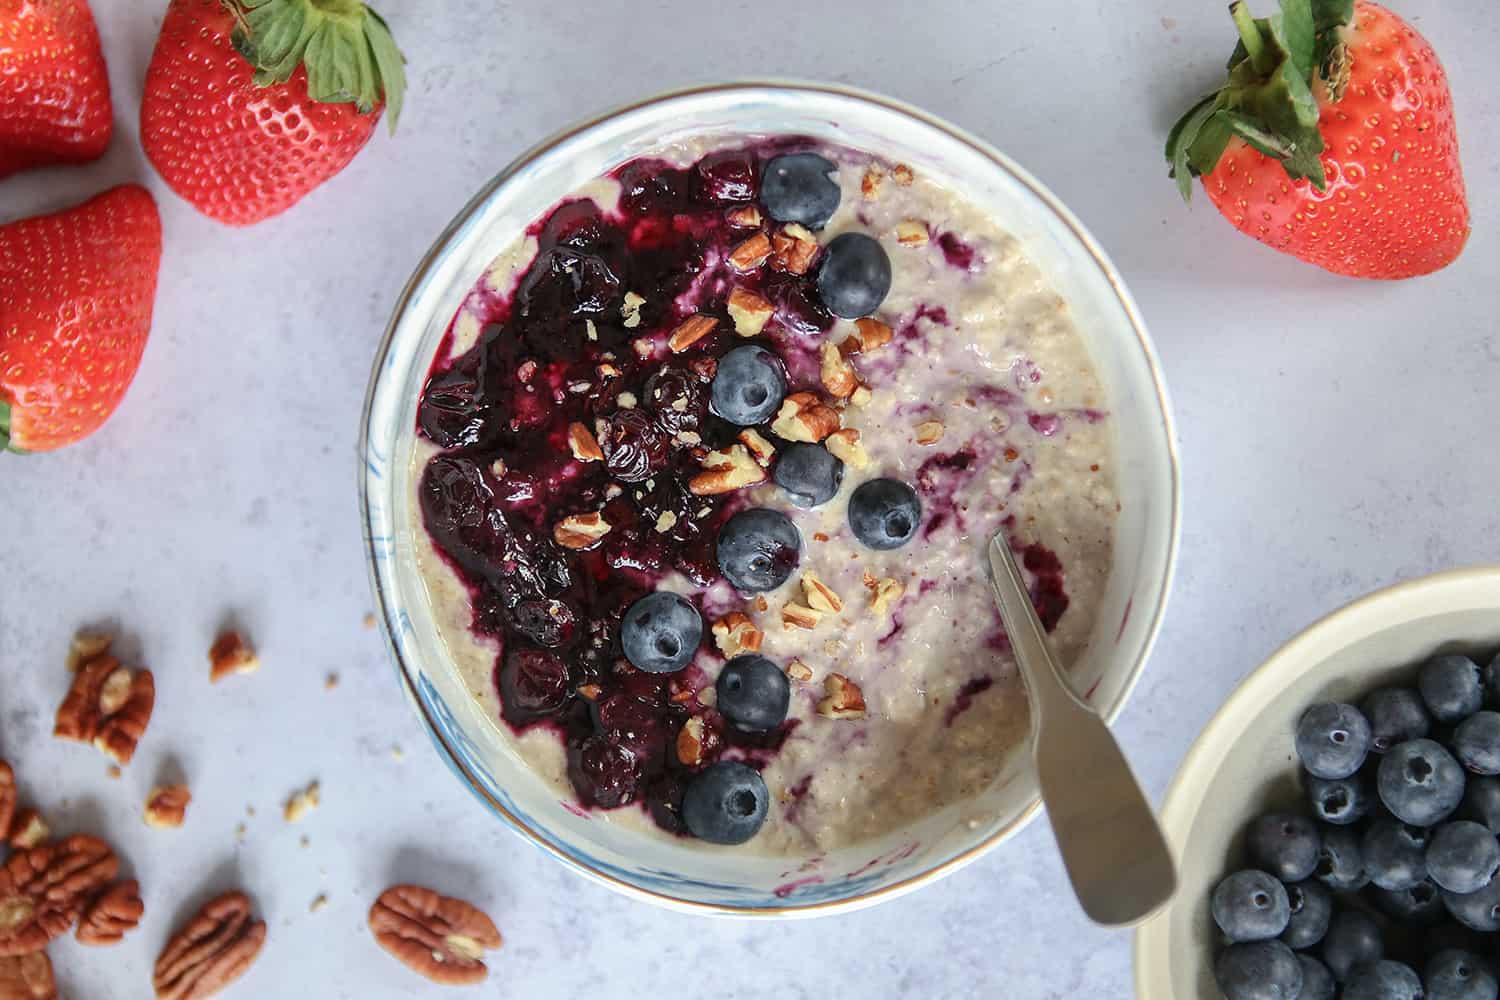 https://glutenfreecuppatea.co.uk/wp-content/uploads/2019/01/gluten-free-overnight-oats-recipe-featured-vegan-dairy-free.jpg